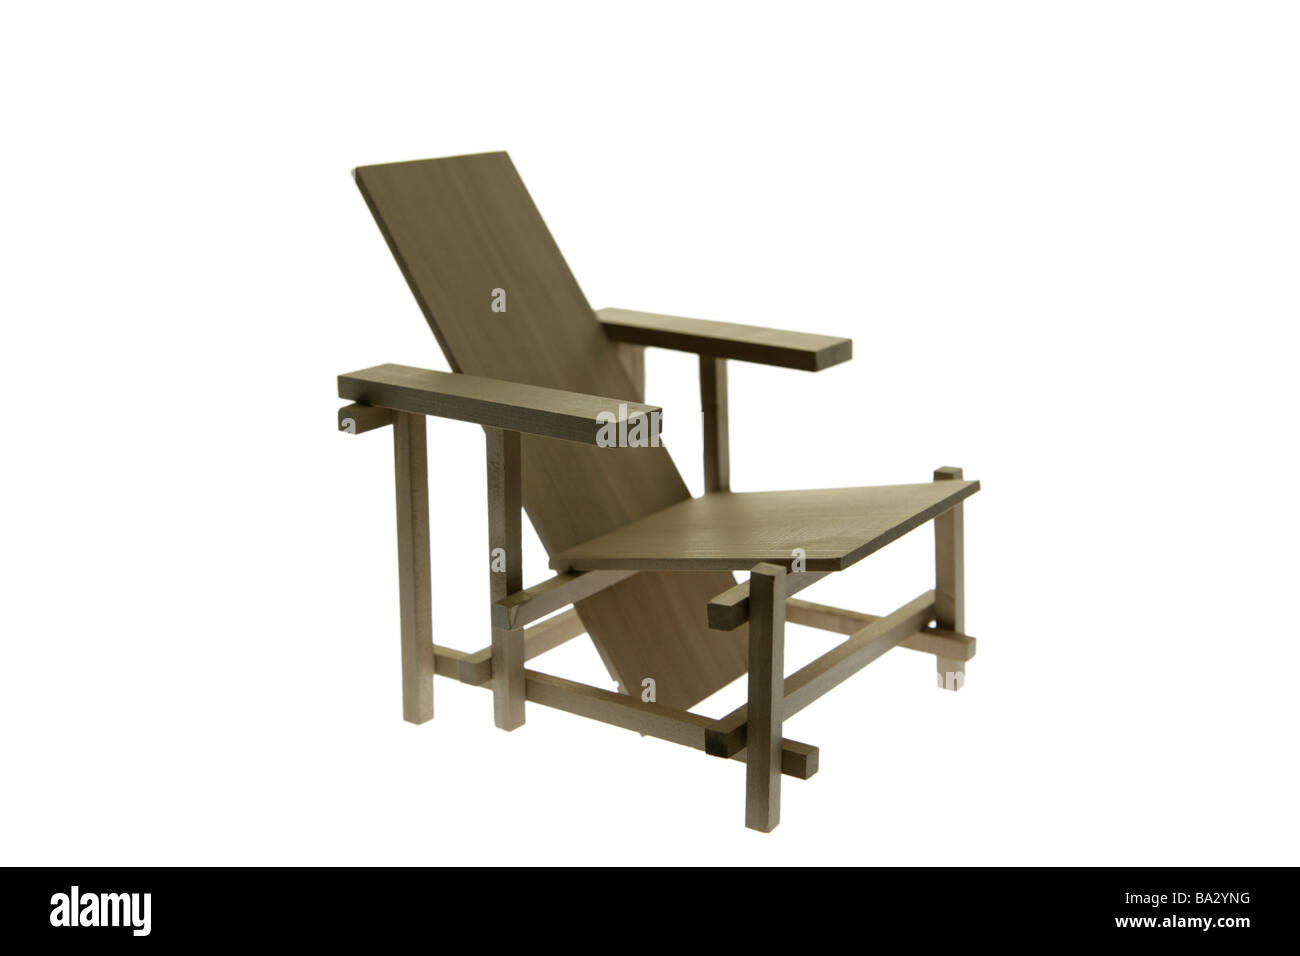 Holz-Stuhl Bauhaus-Sessel im Bauhaus-Stil Stil Design klassisch modernen  Zeit Stuhl Möbel Sitz-Möbel Holz hölzern Stockfotografie - Alamy